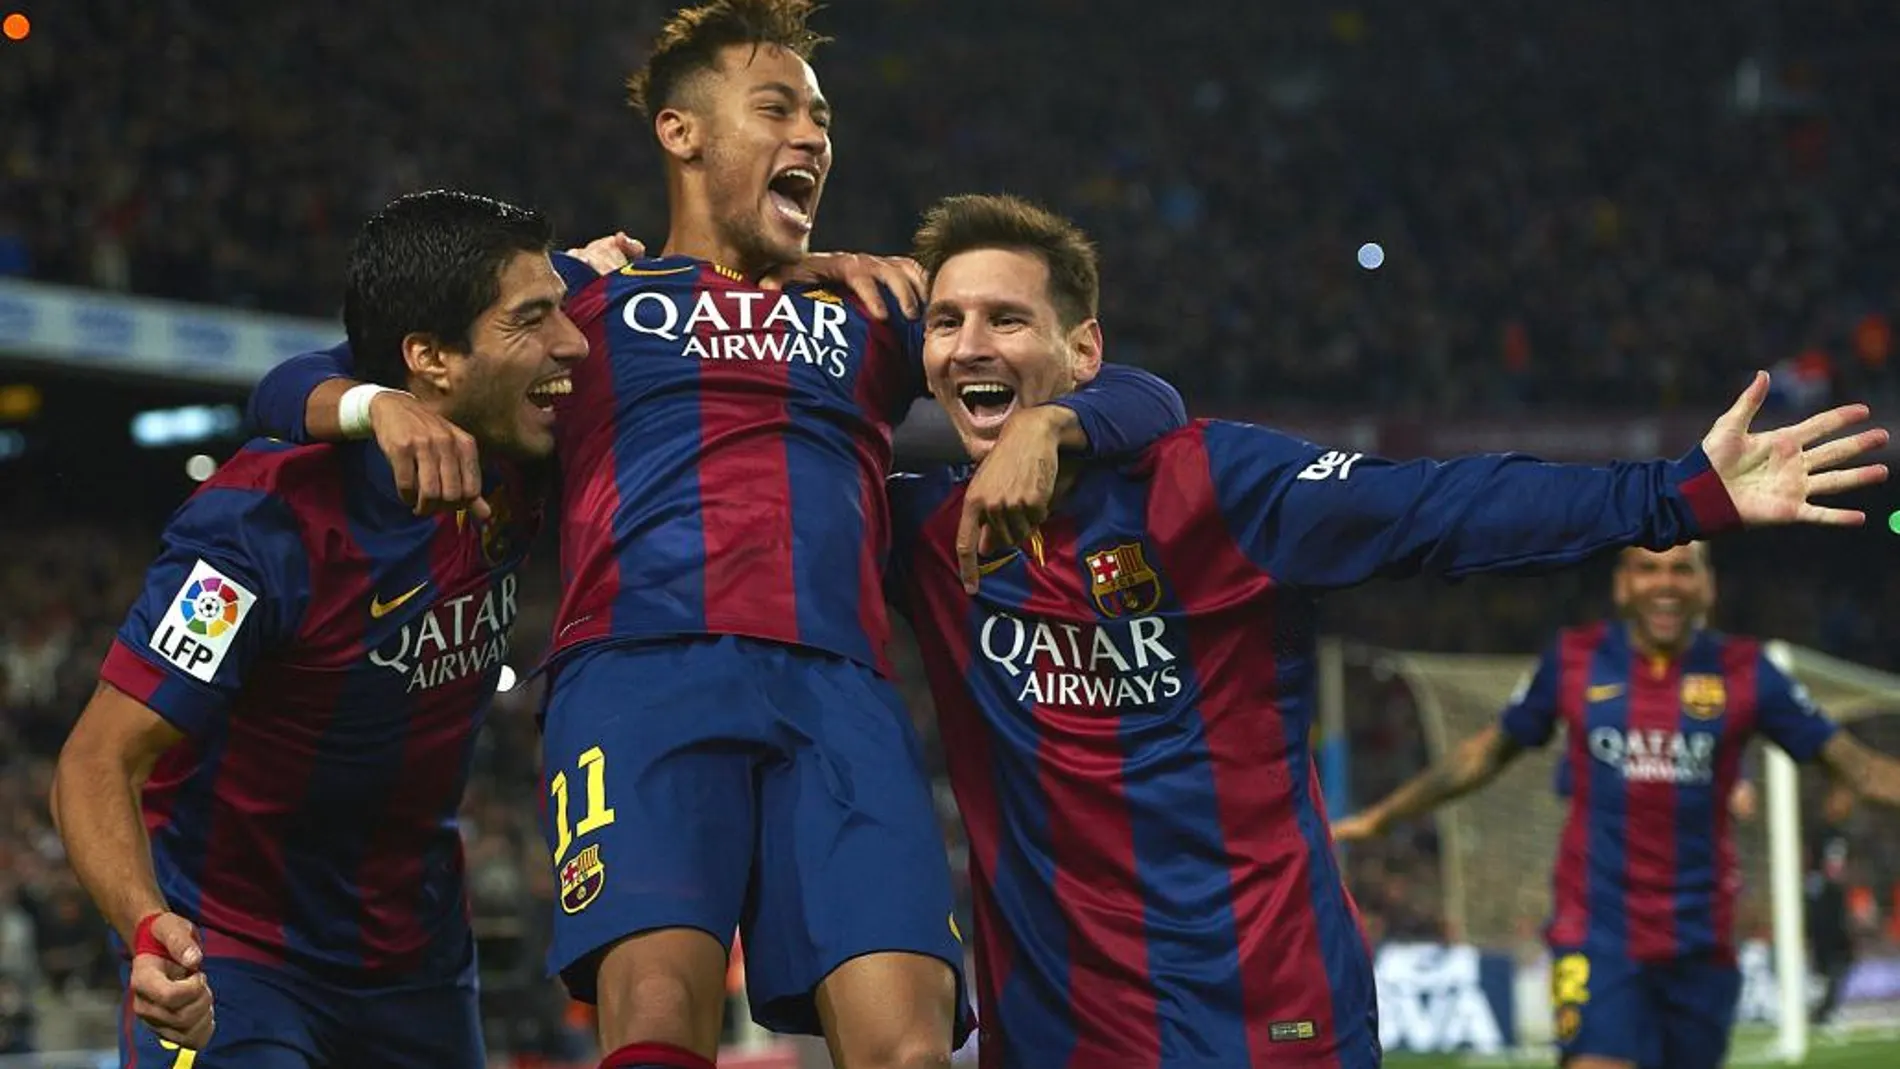 Lionel Messi, Neymar y Luis Suarez